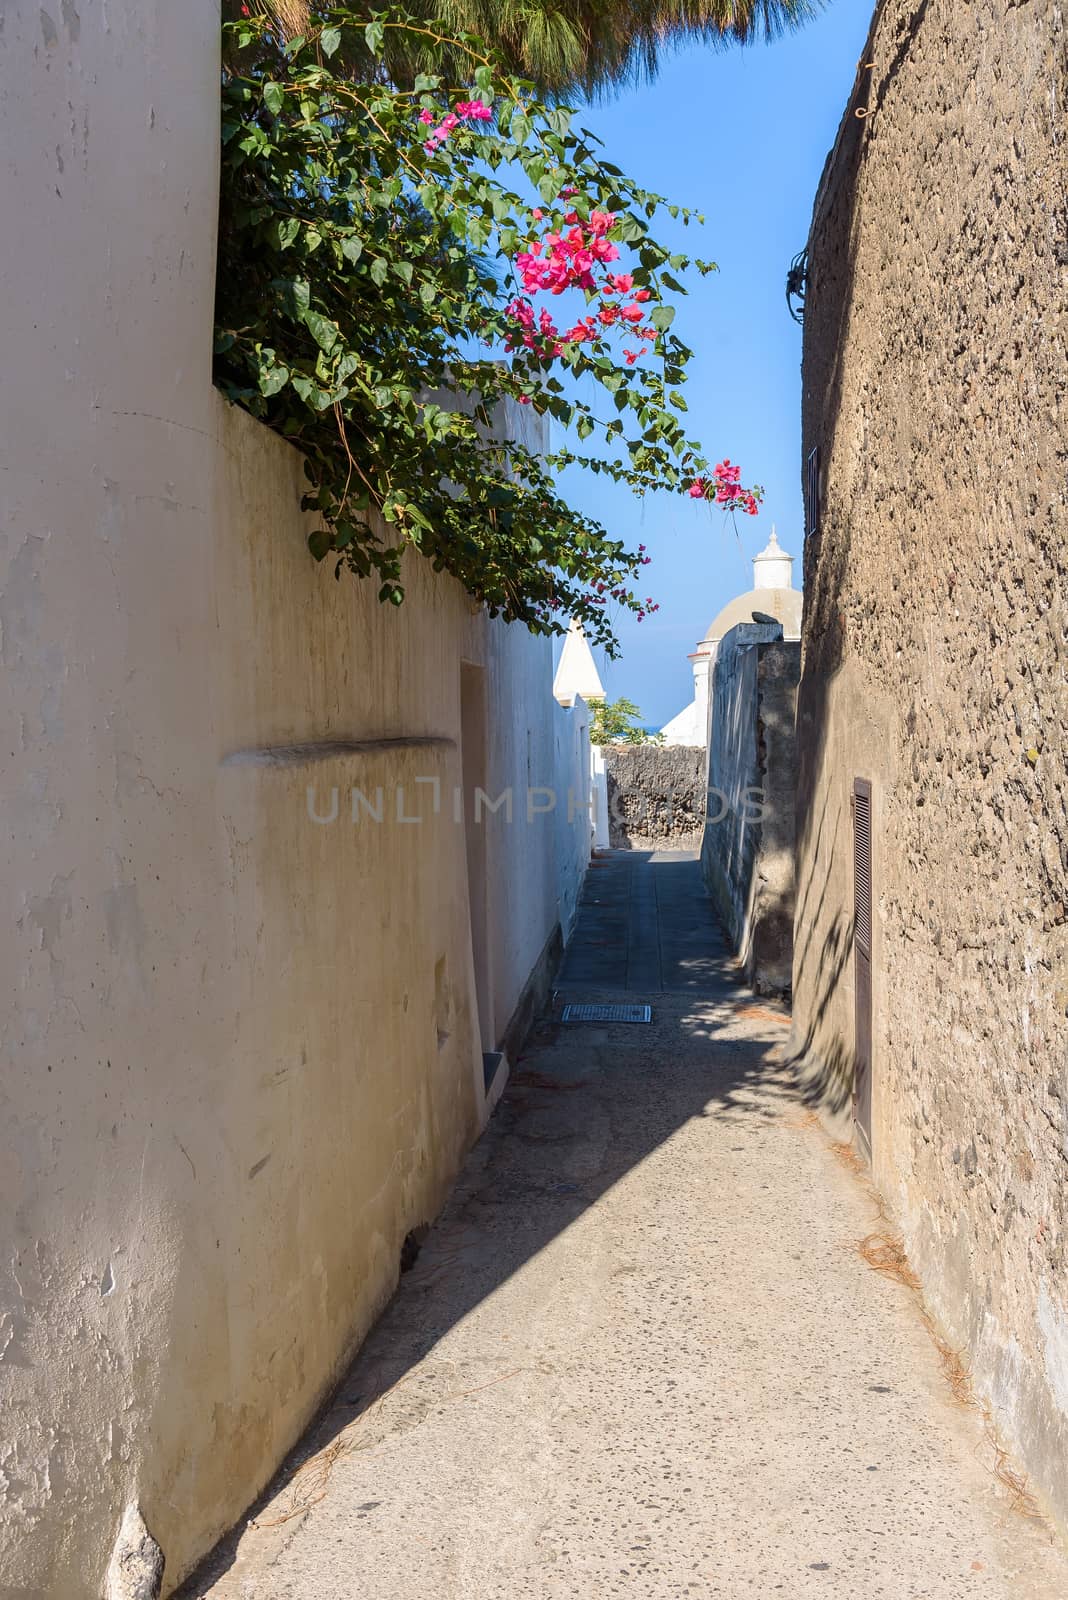 Narrow street in a village on Stromboli Island by mkos83